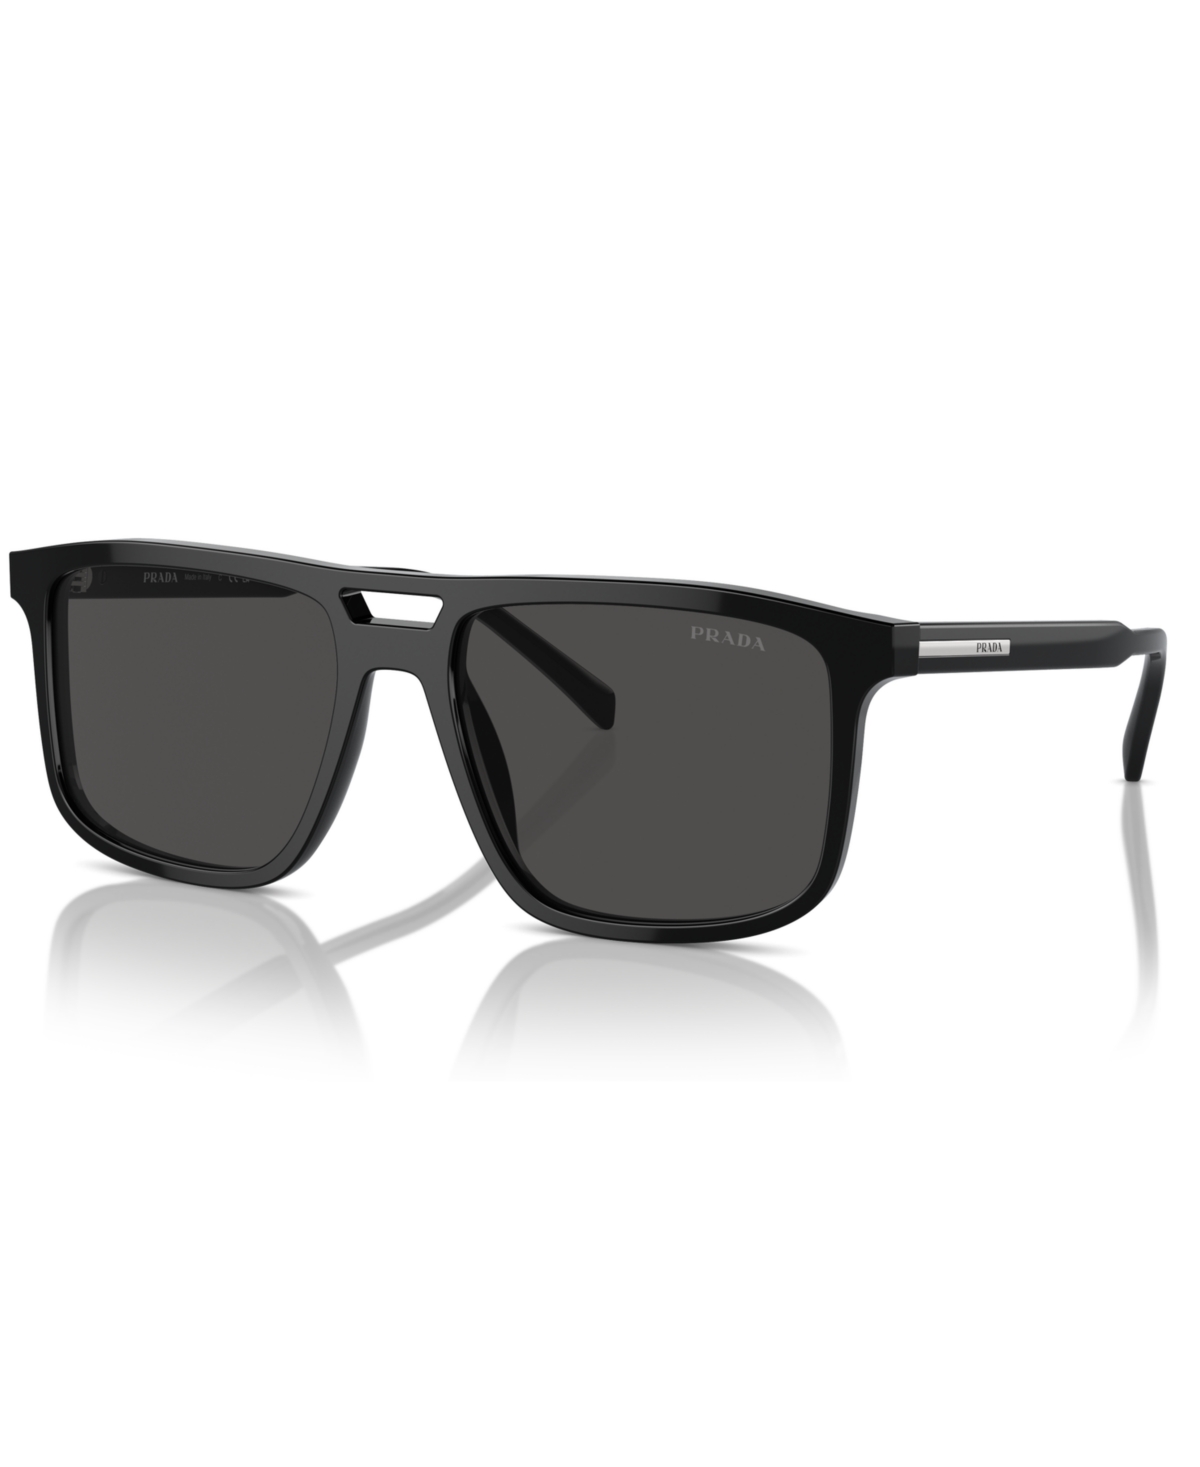 Men's Sunglasses, Pr A22S - Radica